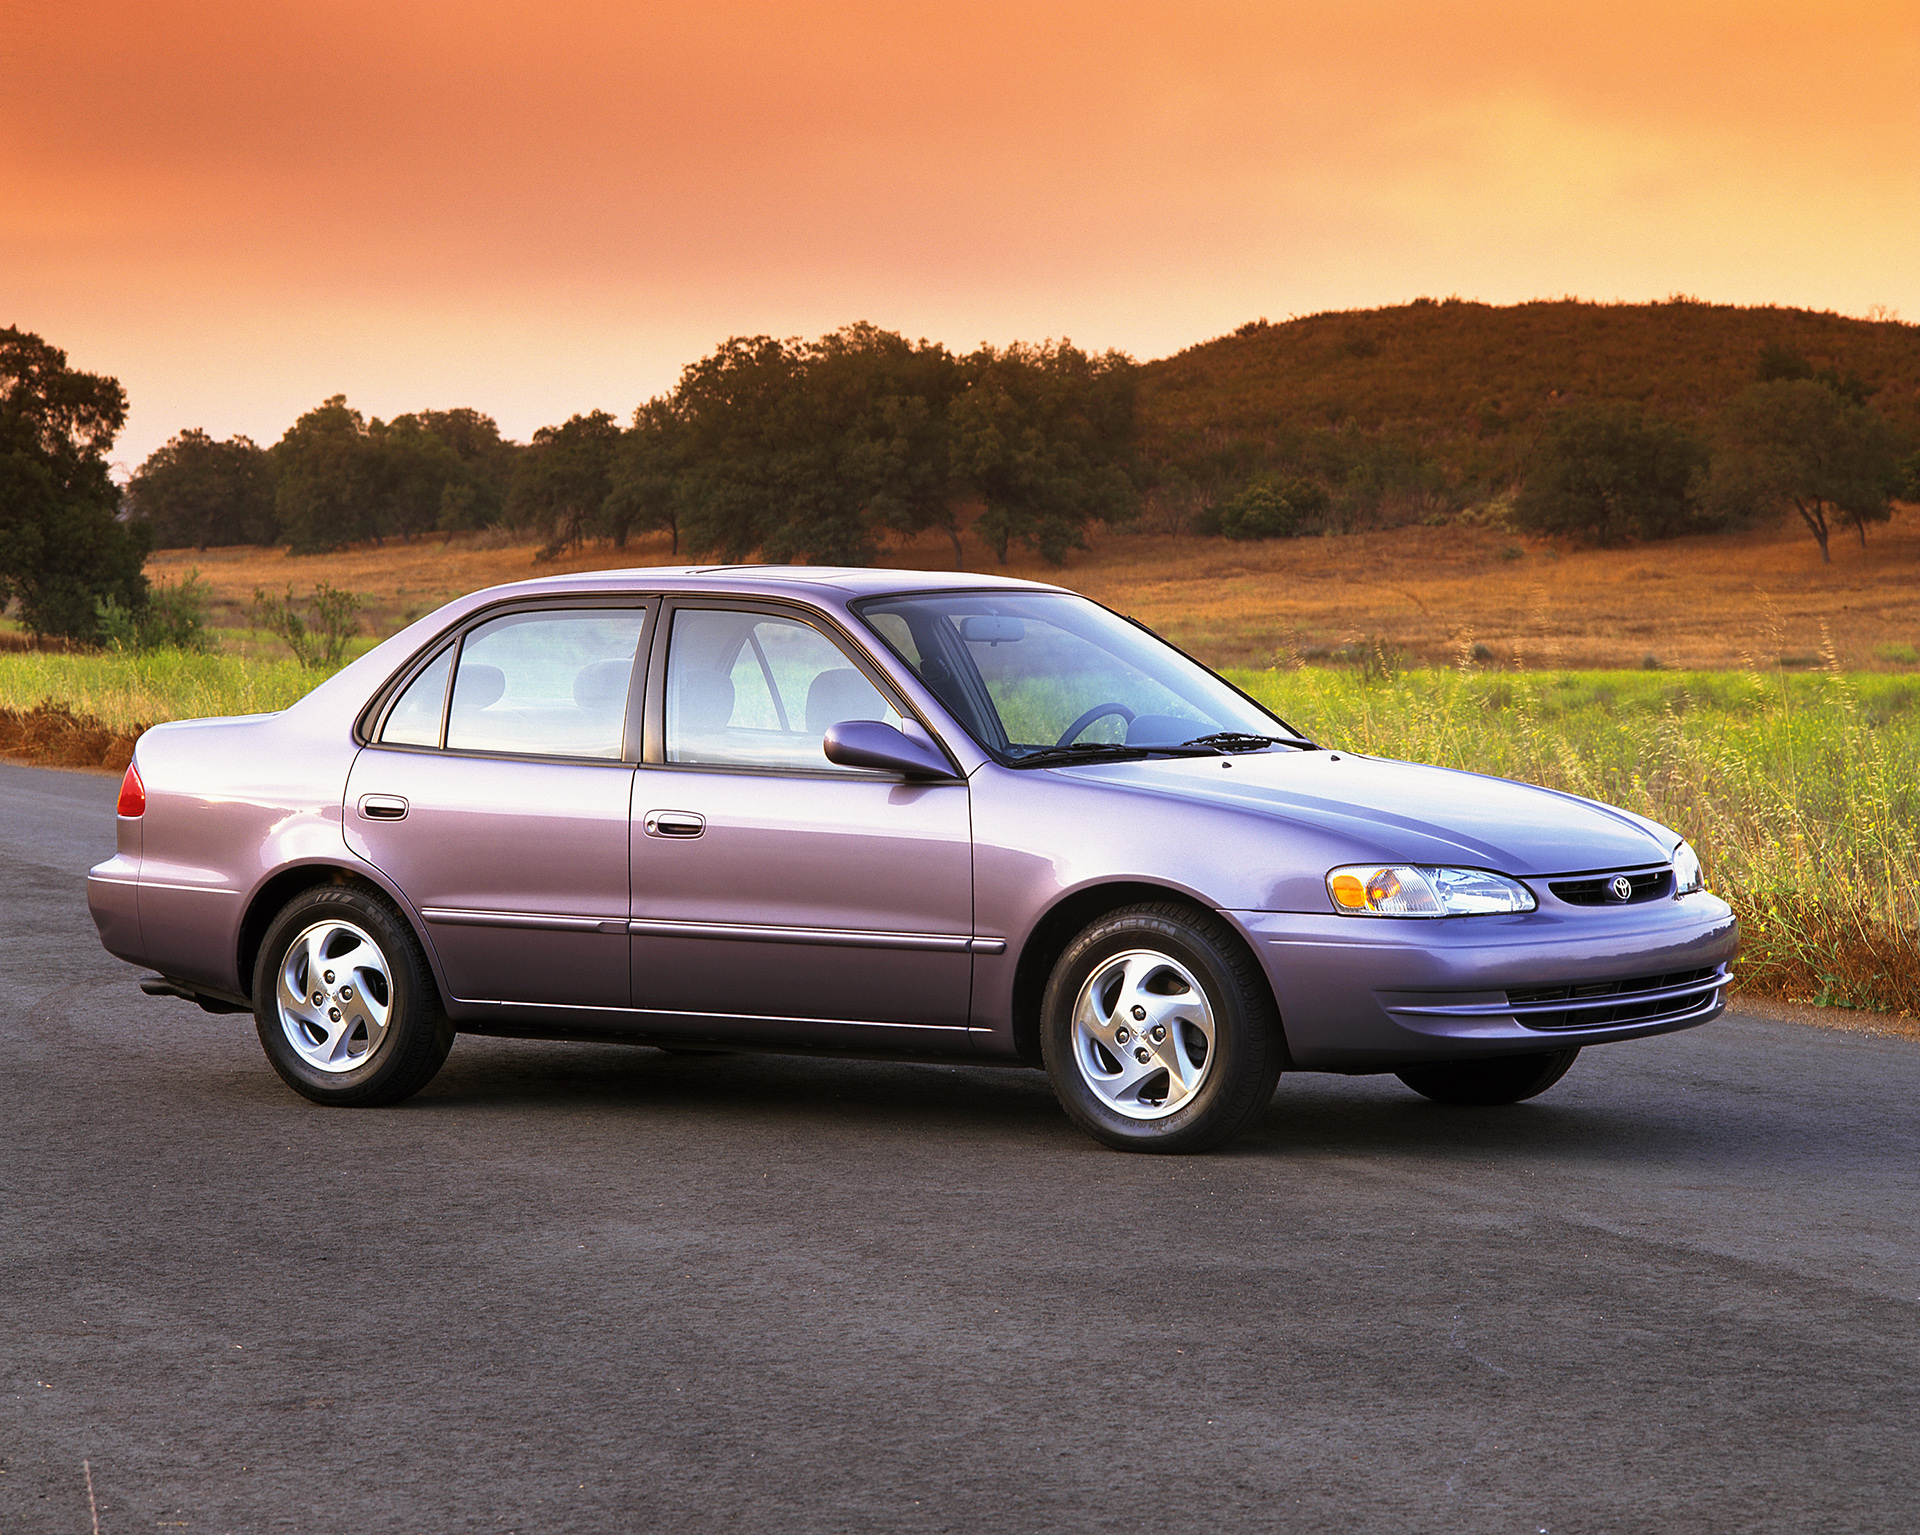 USA - The 8th Generation Corolla (1998 - 2002)